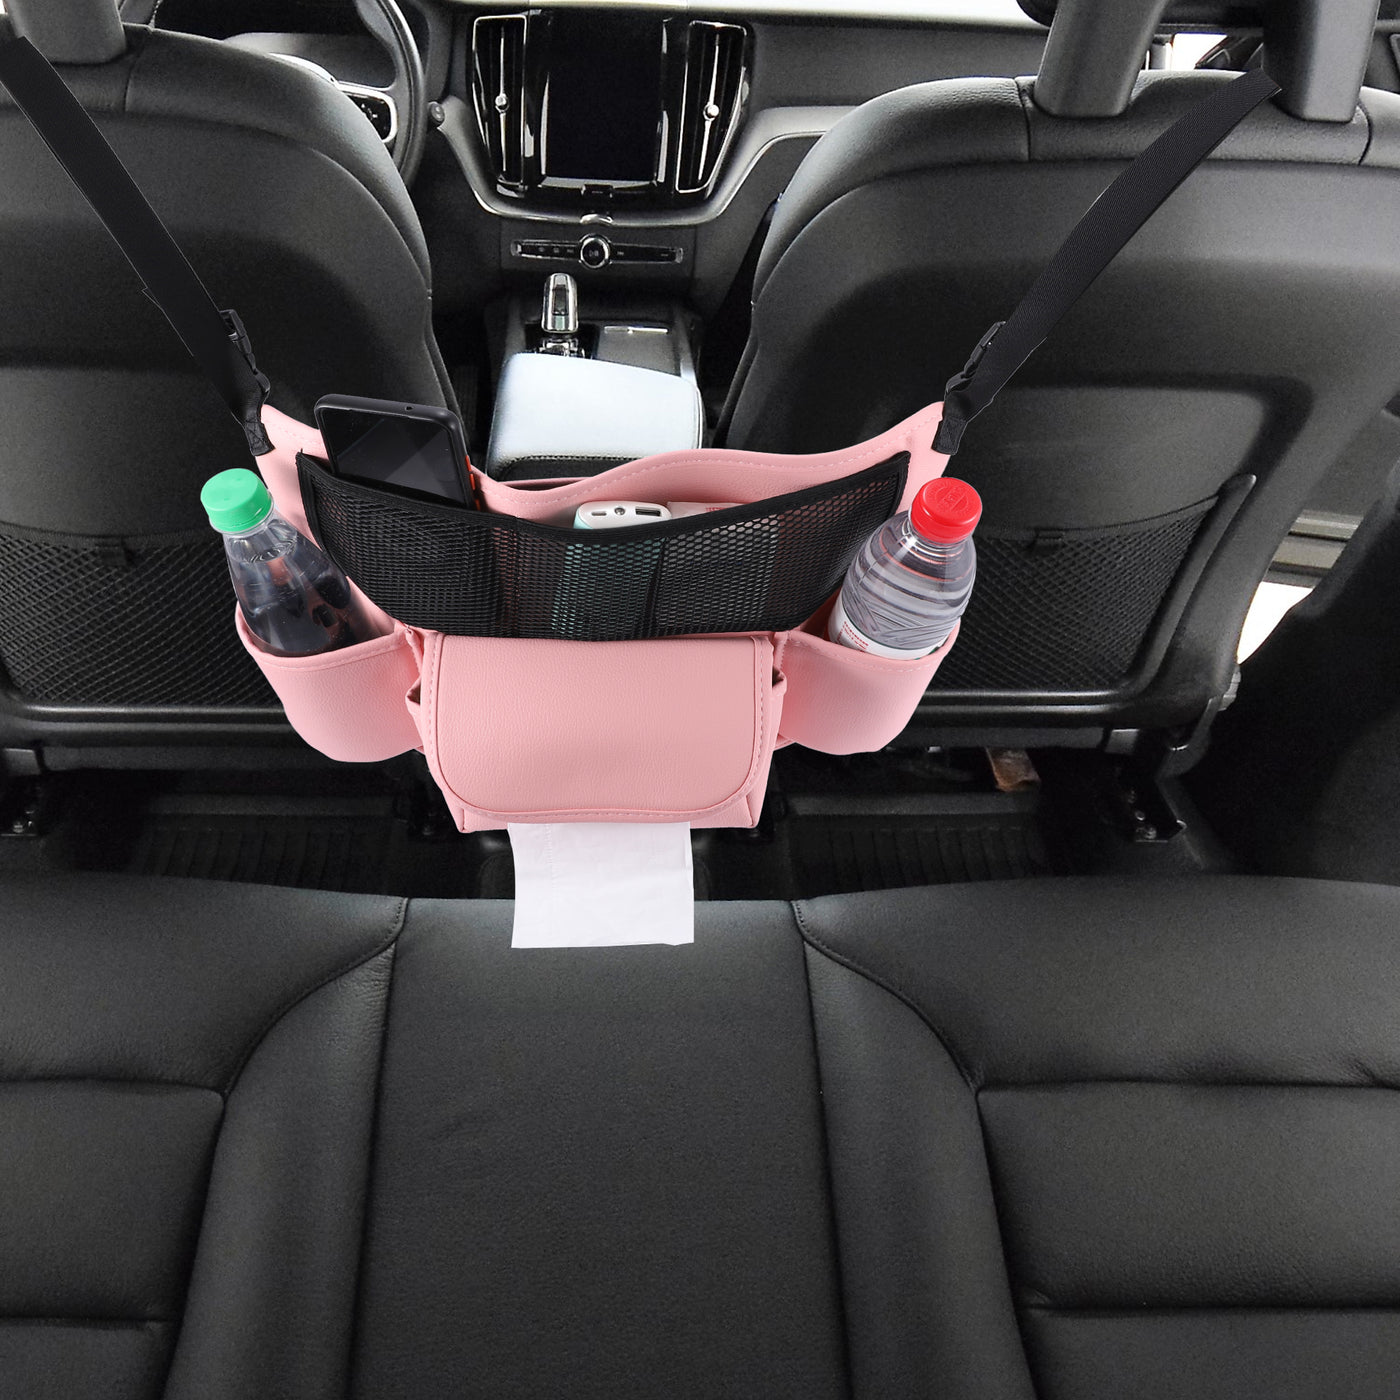 X AUTOHAUX Car Large Capacity Seat Organizer Backseat Multi Pockets Purse Storage Universal Fit for Car Truck SUV 37x25cm